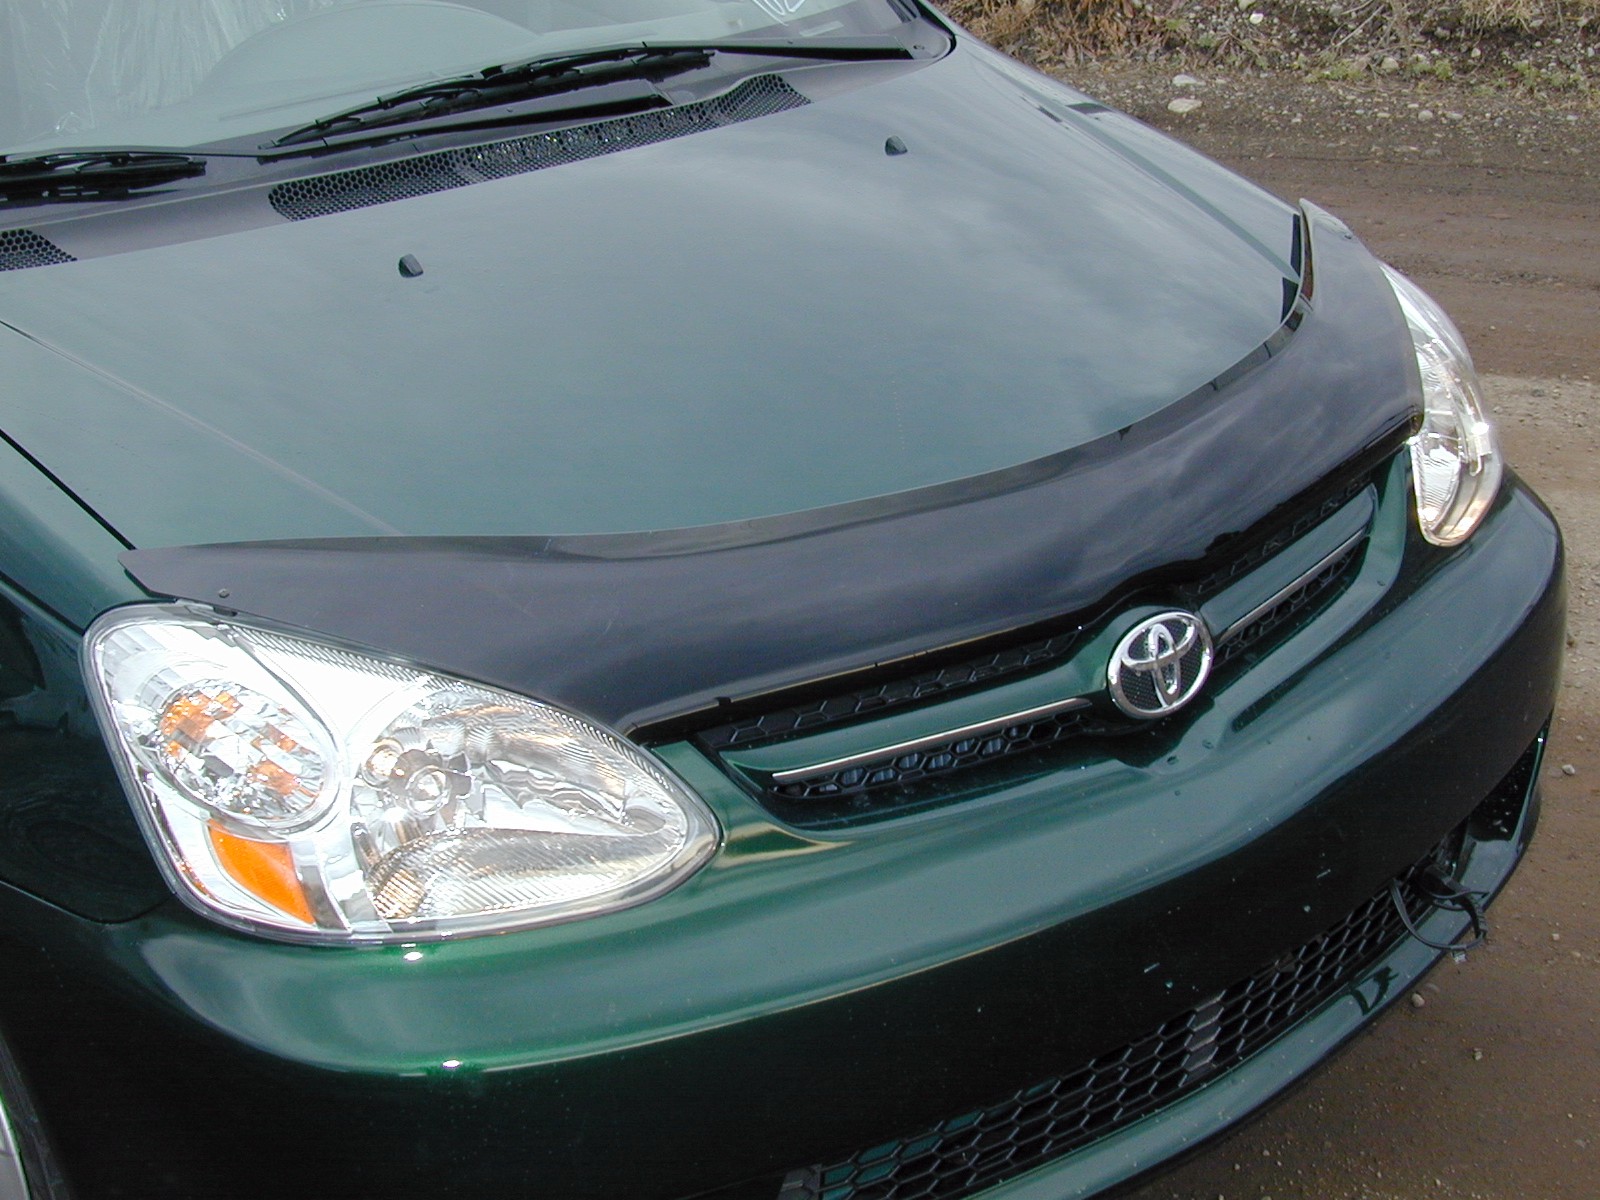 Toyota Echo (2003-2005) FormFit Hood Protector